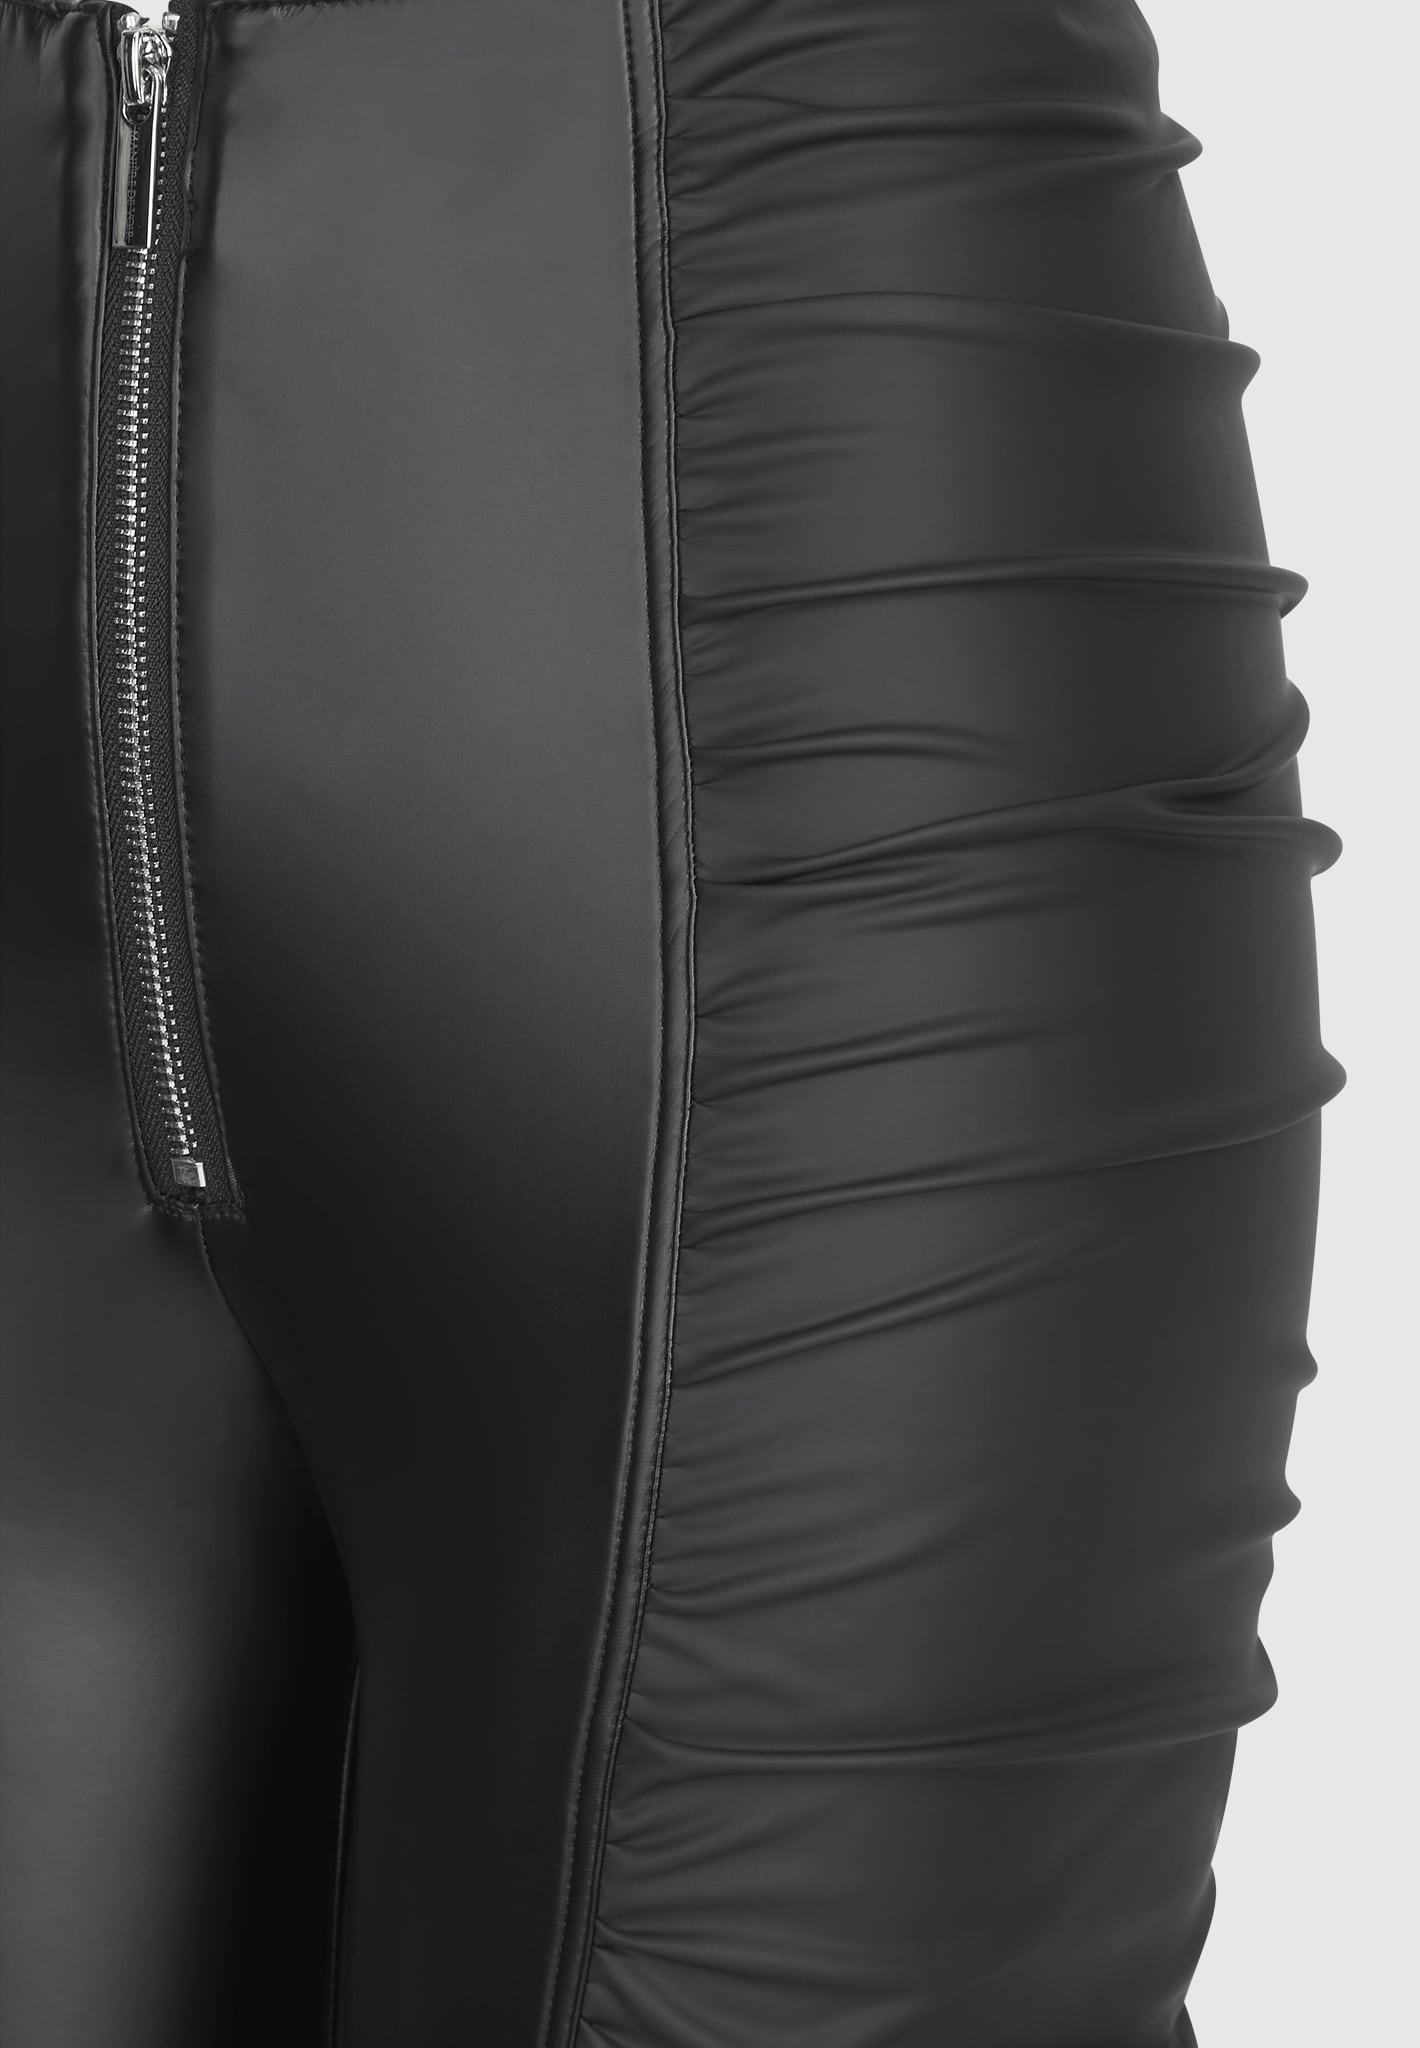 ruched-vegan-leather-leggings-black-1